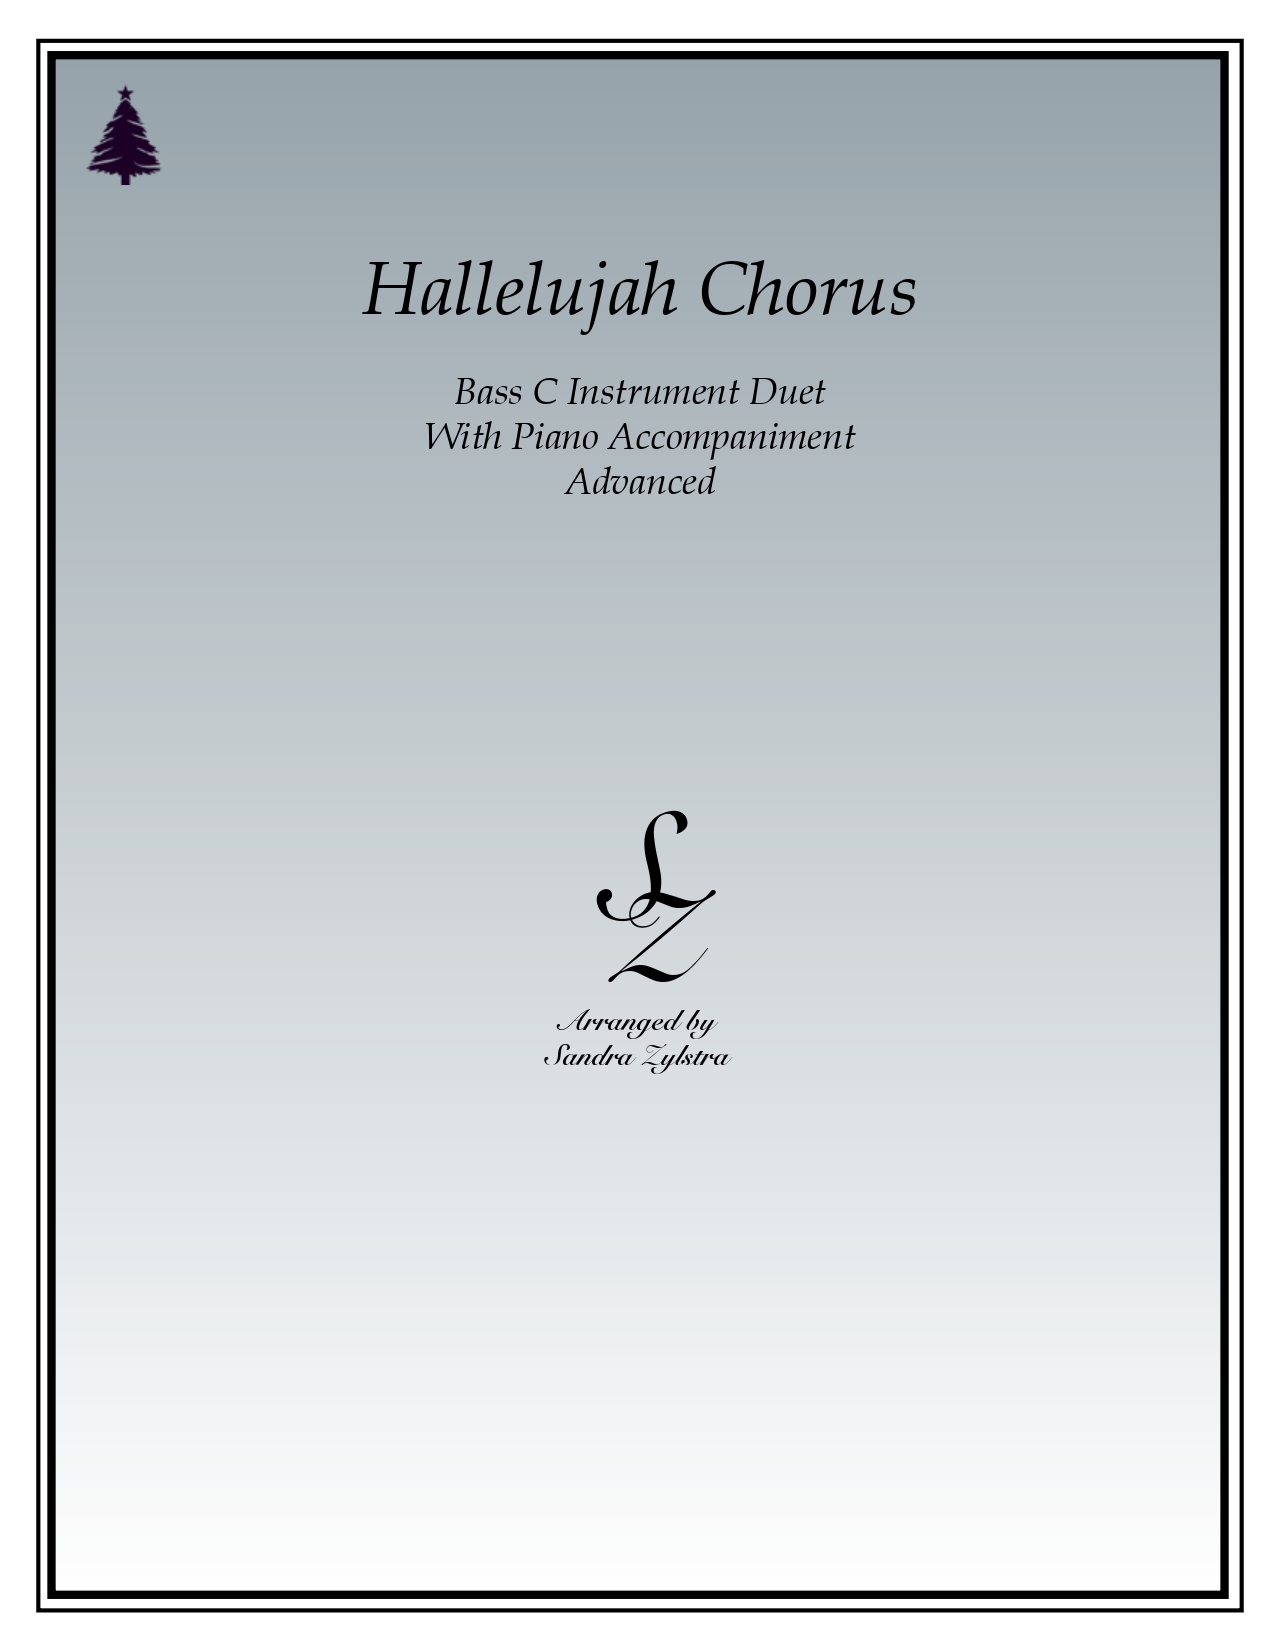 Hallelujah Chorus bass C instrument duet parts cover page 00011